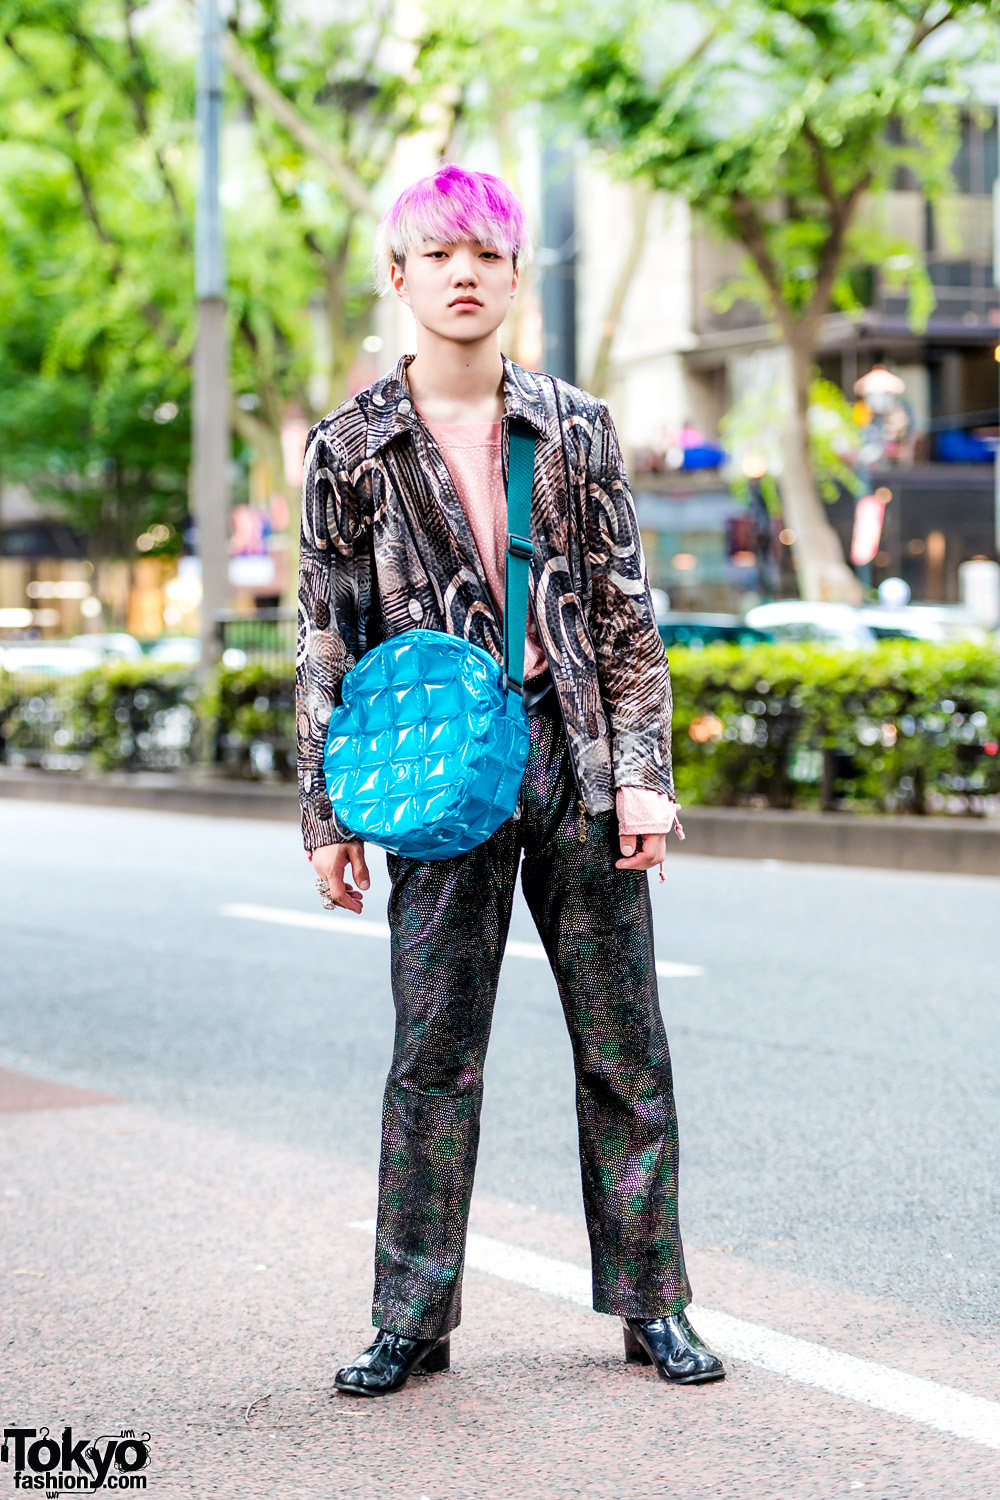 Mixed Prints Street Style w/ New York Joe Textured Shirt, Mercibeaucoup Top, Kinji Metallic Pants & Quilted Bag